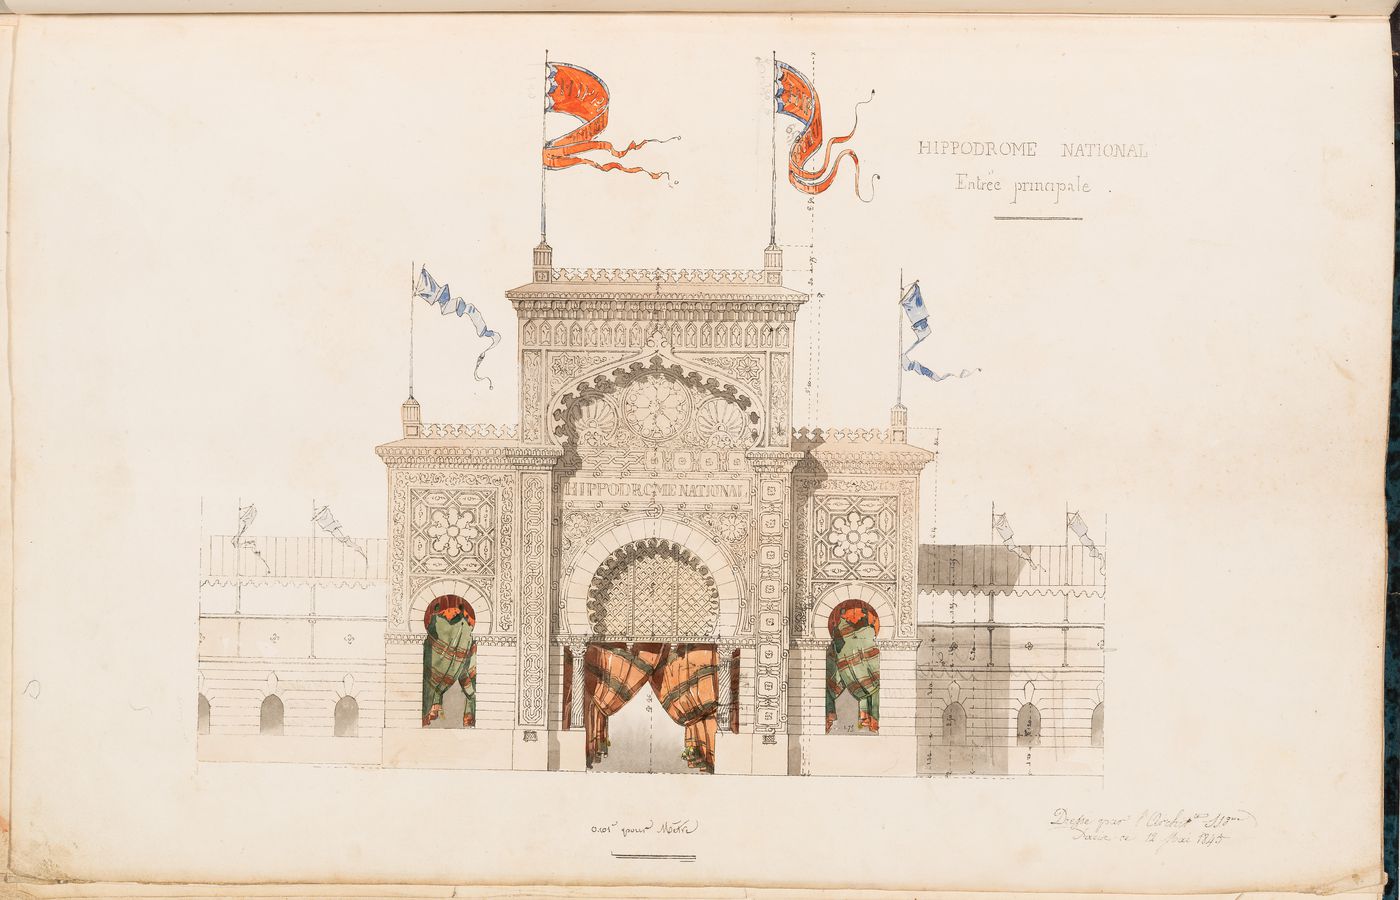 Hippodrome national, Paris: Elevation for the principal entrance